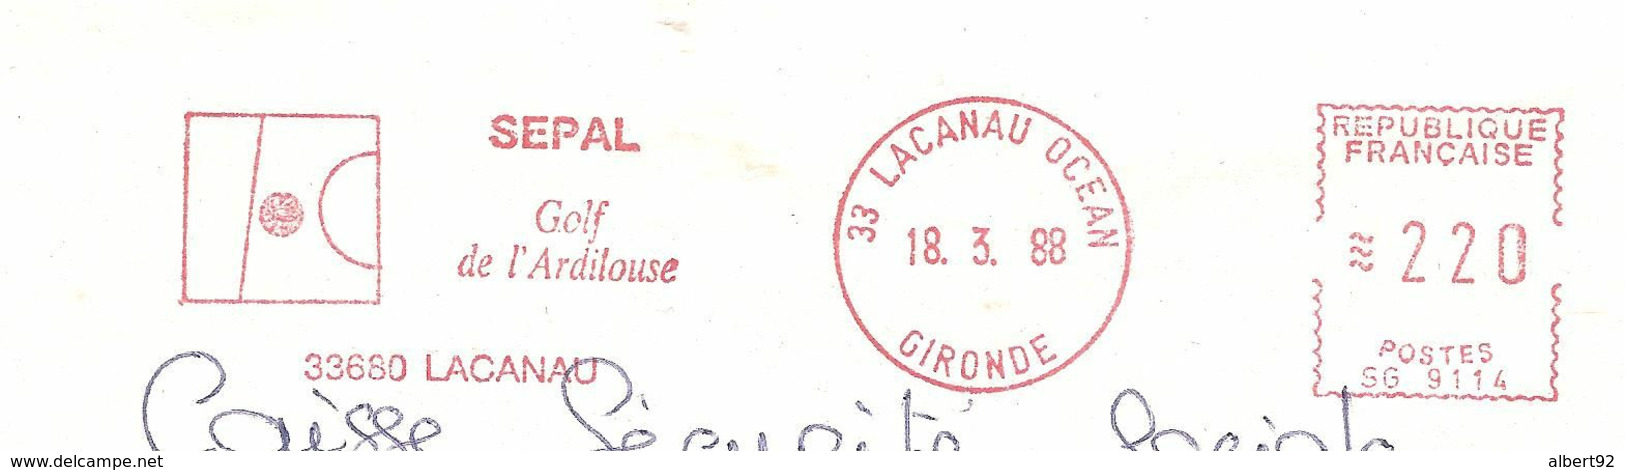 1988 EMA Golf De L'Ardilouse .Lacanau. (n° SG 9114) - Golf